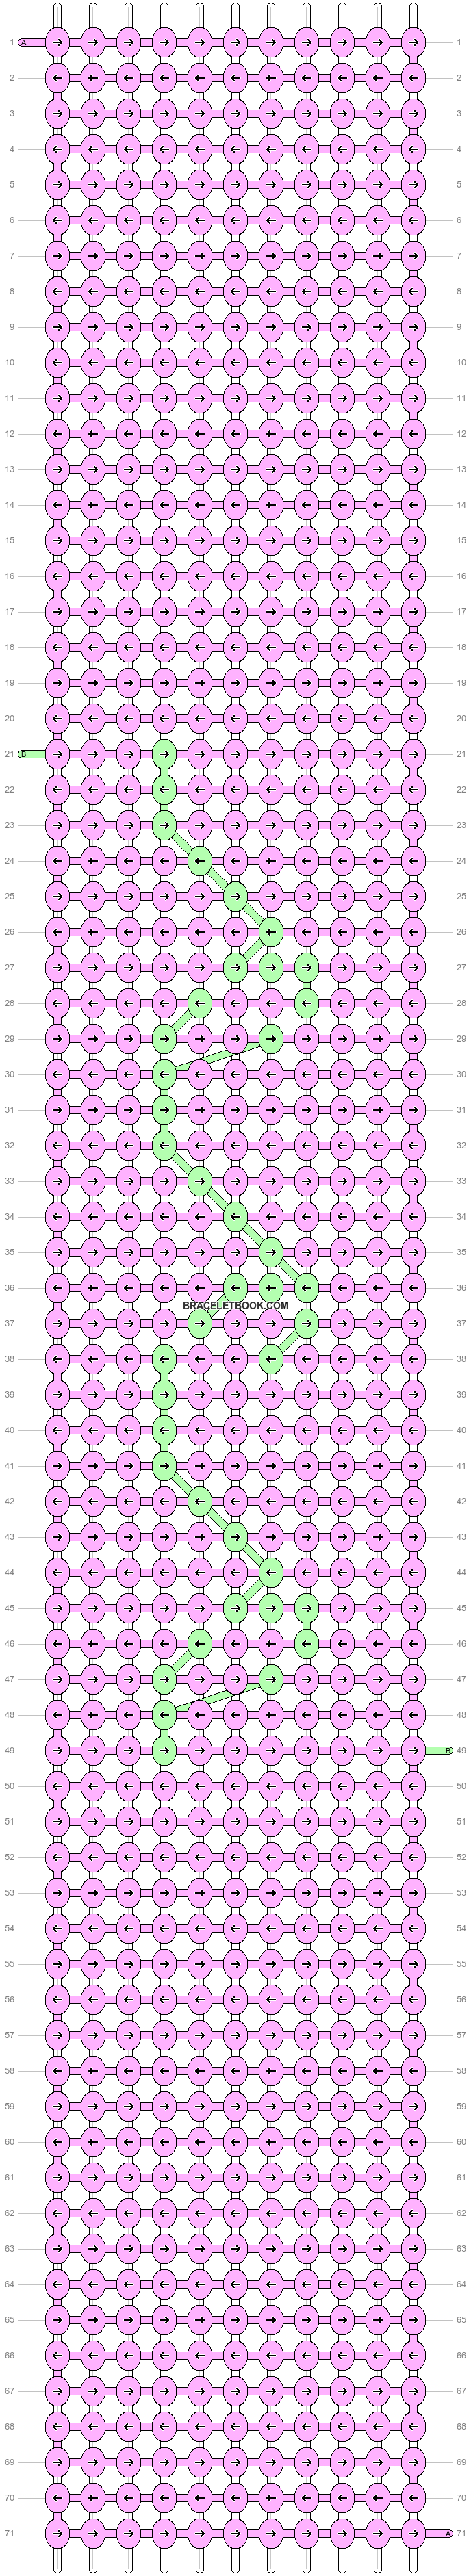 Alpha pattern #38672 variation #44500 pattern